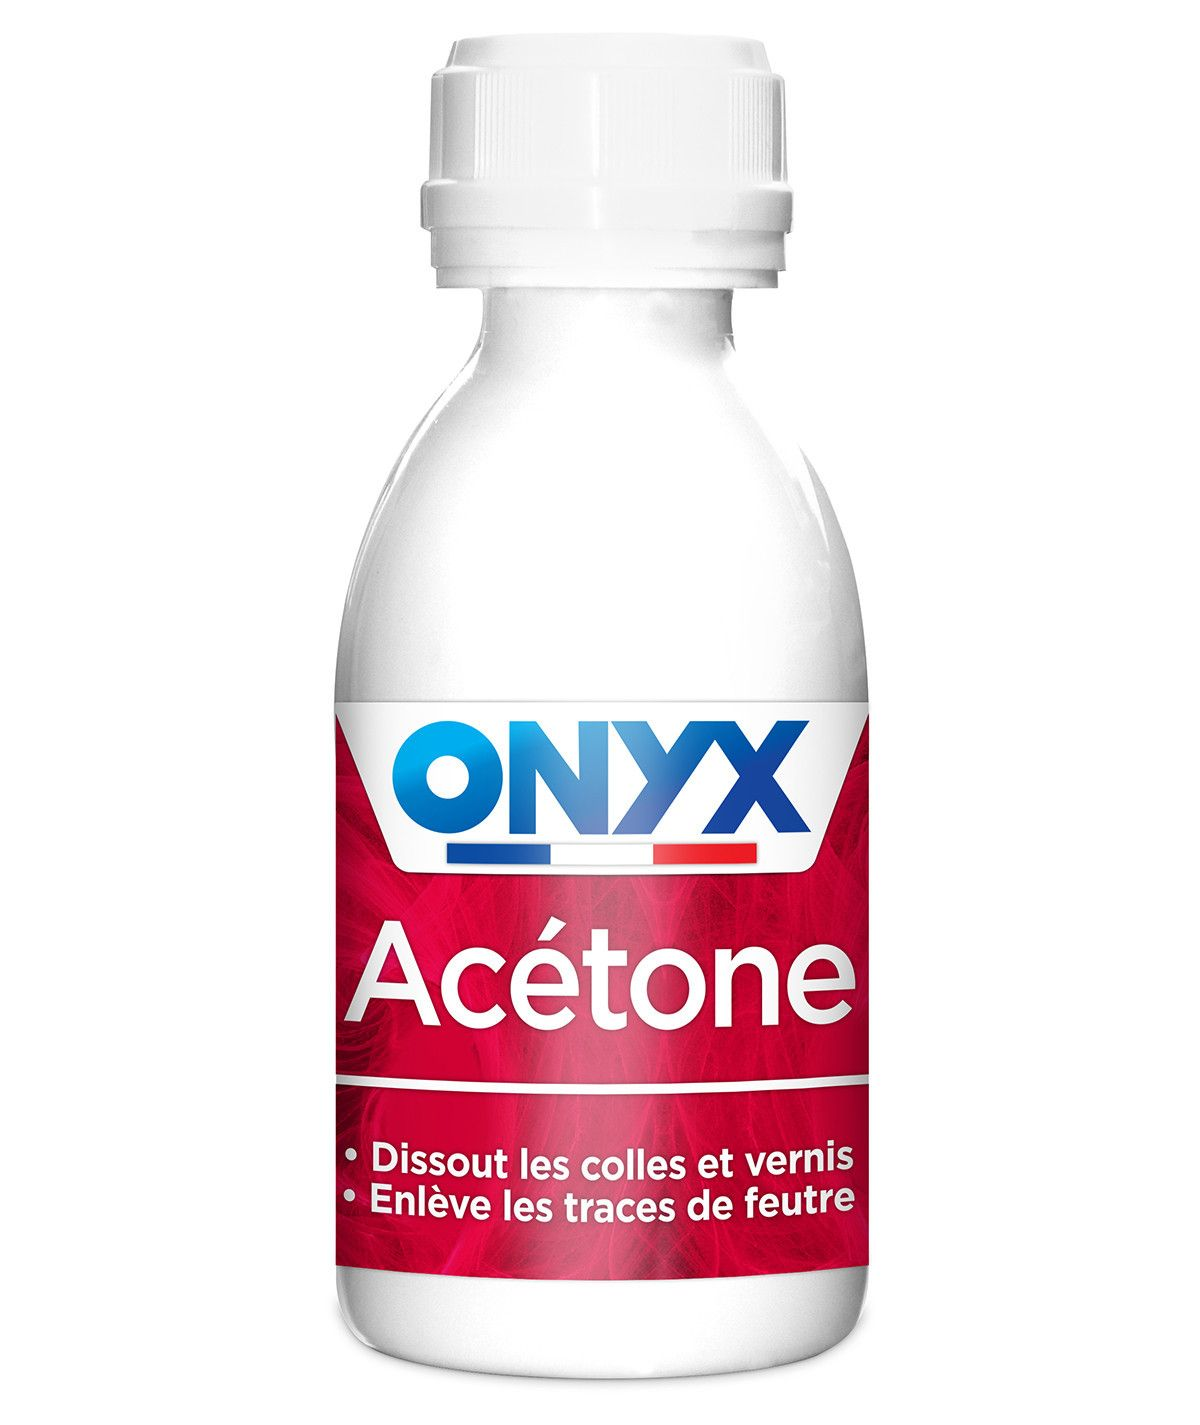 Acetone solvent for glues, varnishes, paints, 190 ml bottle